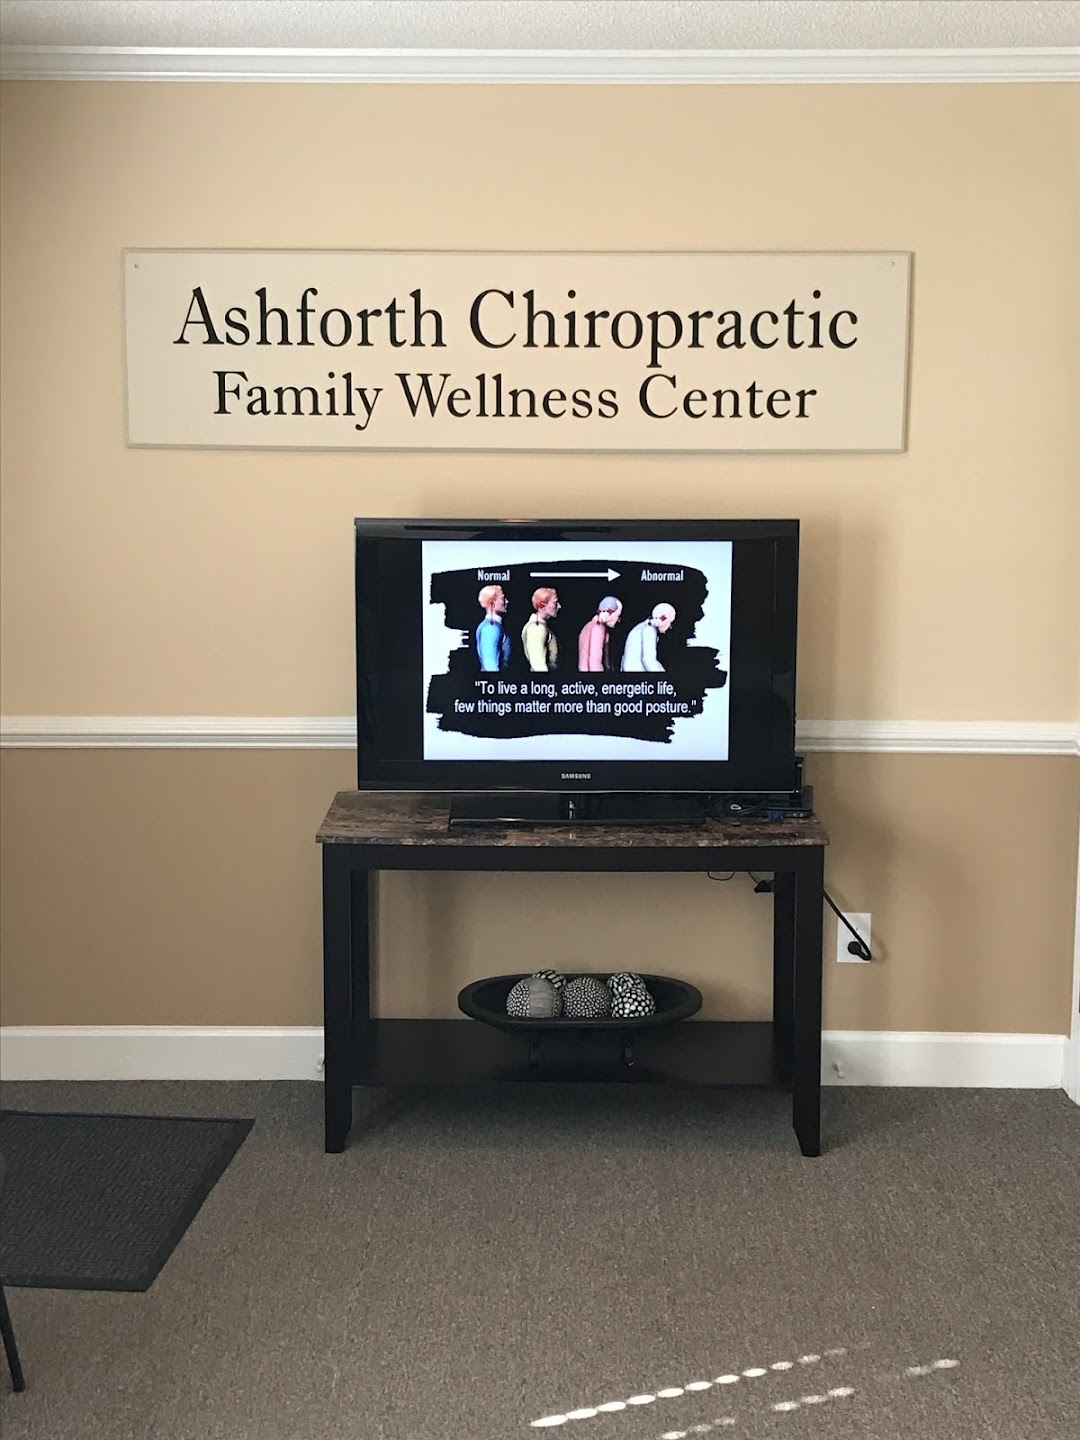 Ashforth Chiropractic Family Wellness Center